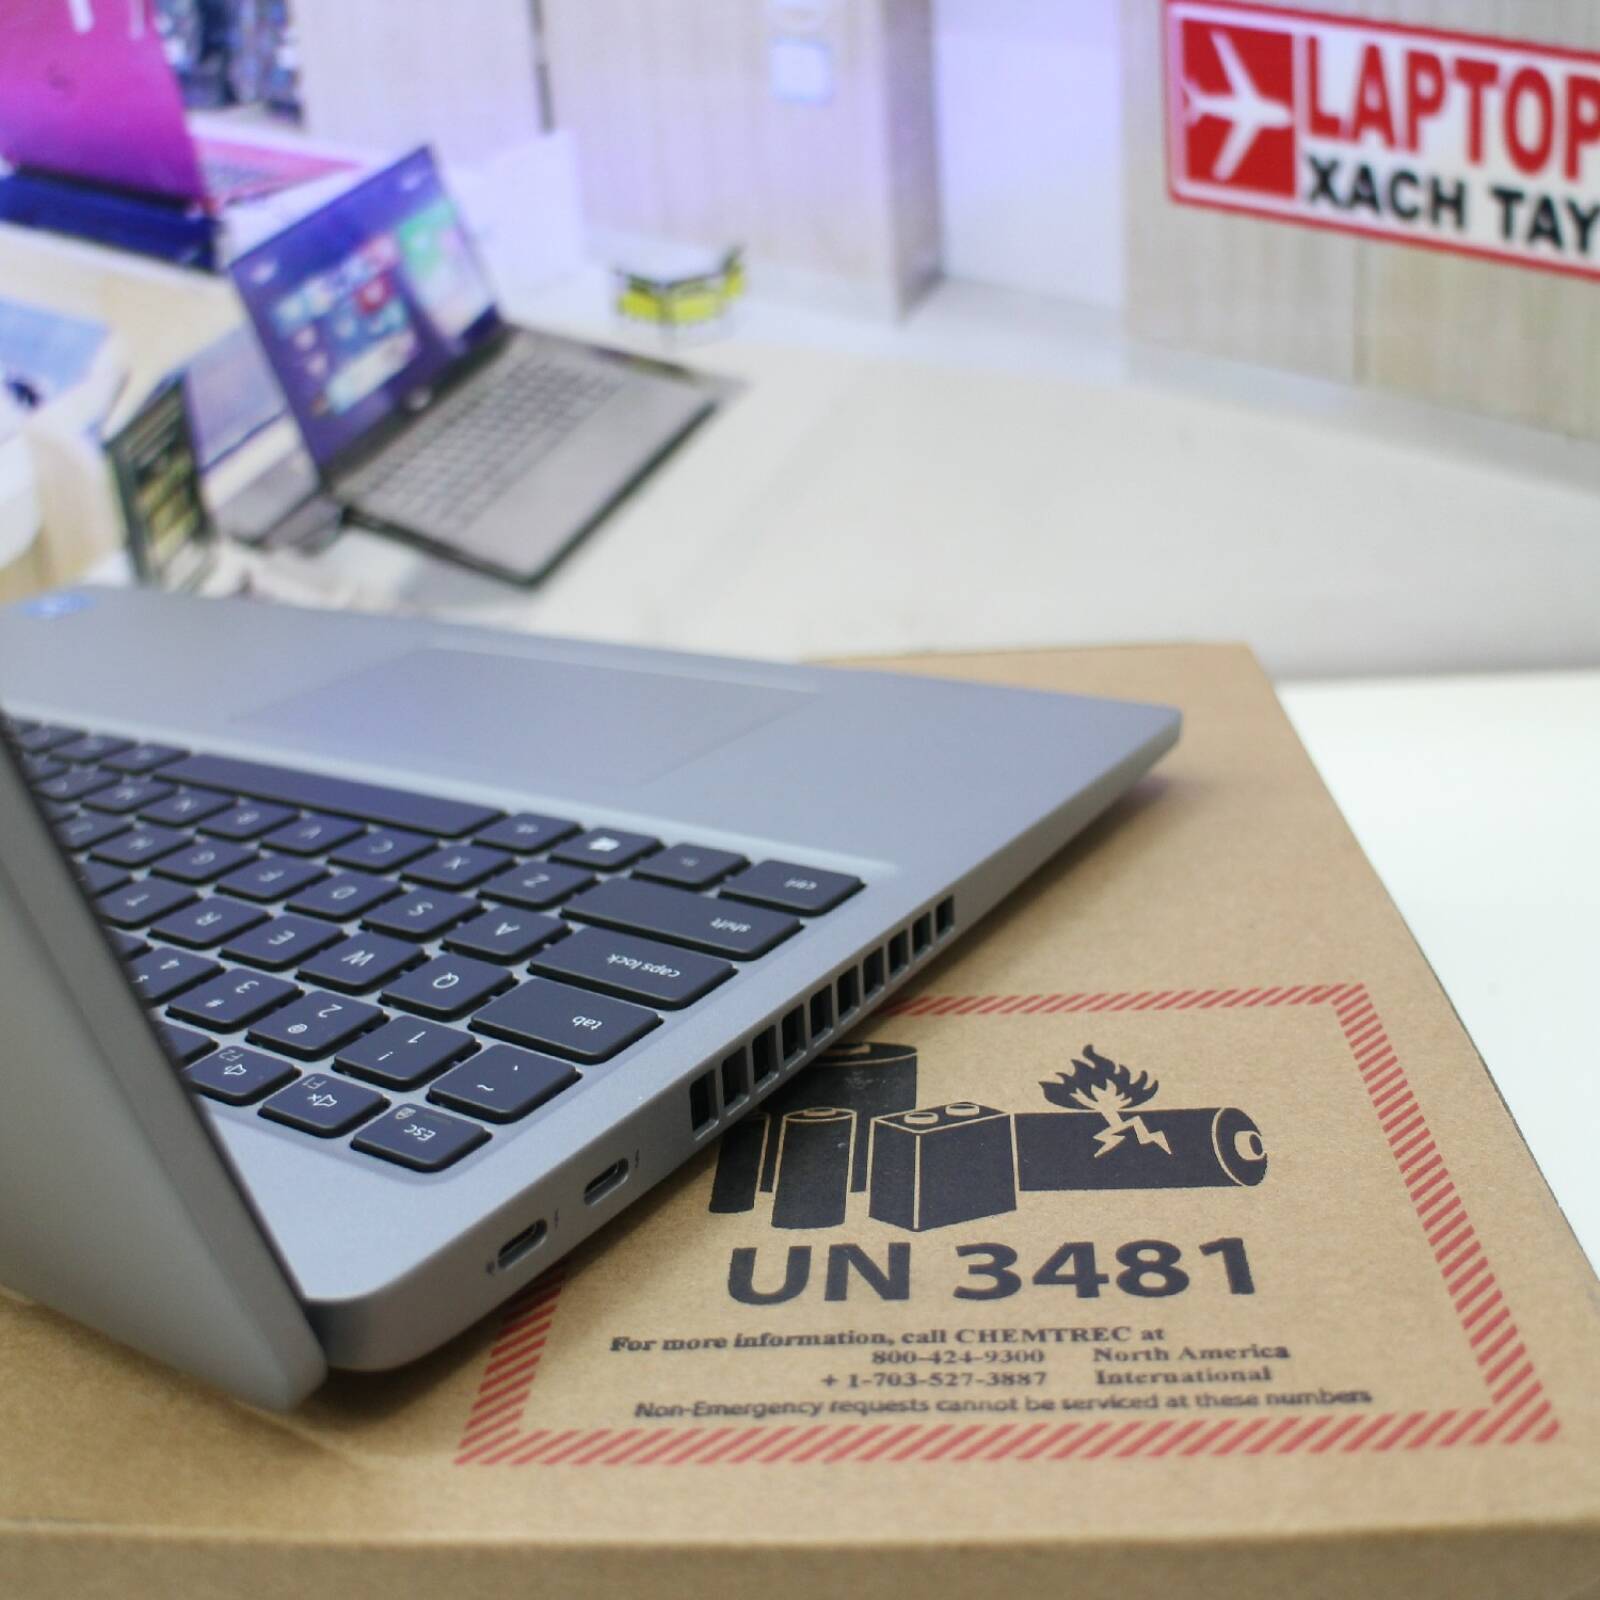 Laptop Dell Latitude 5520 I5 1135G7 Ram 8Gb Ssd 256Gb Fhd - Laptop Xách Tay  Shop